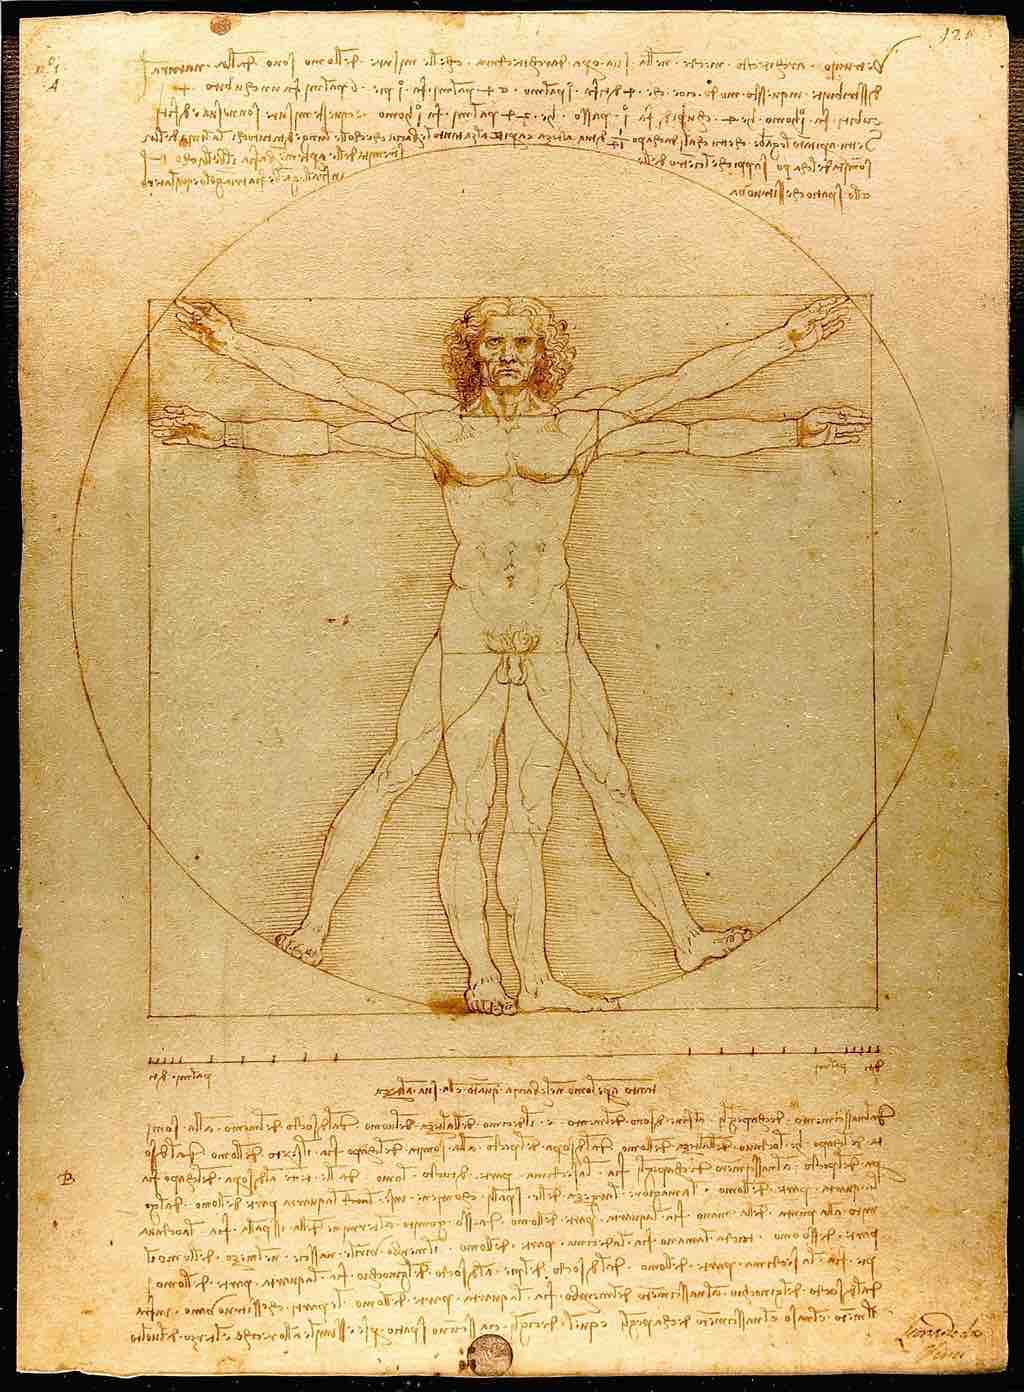 Leonardo da Vinci's "The Vitruvian Man"